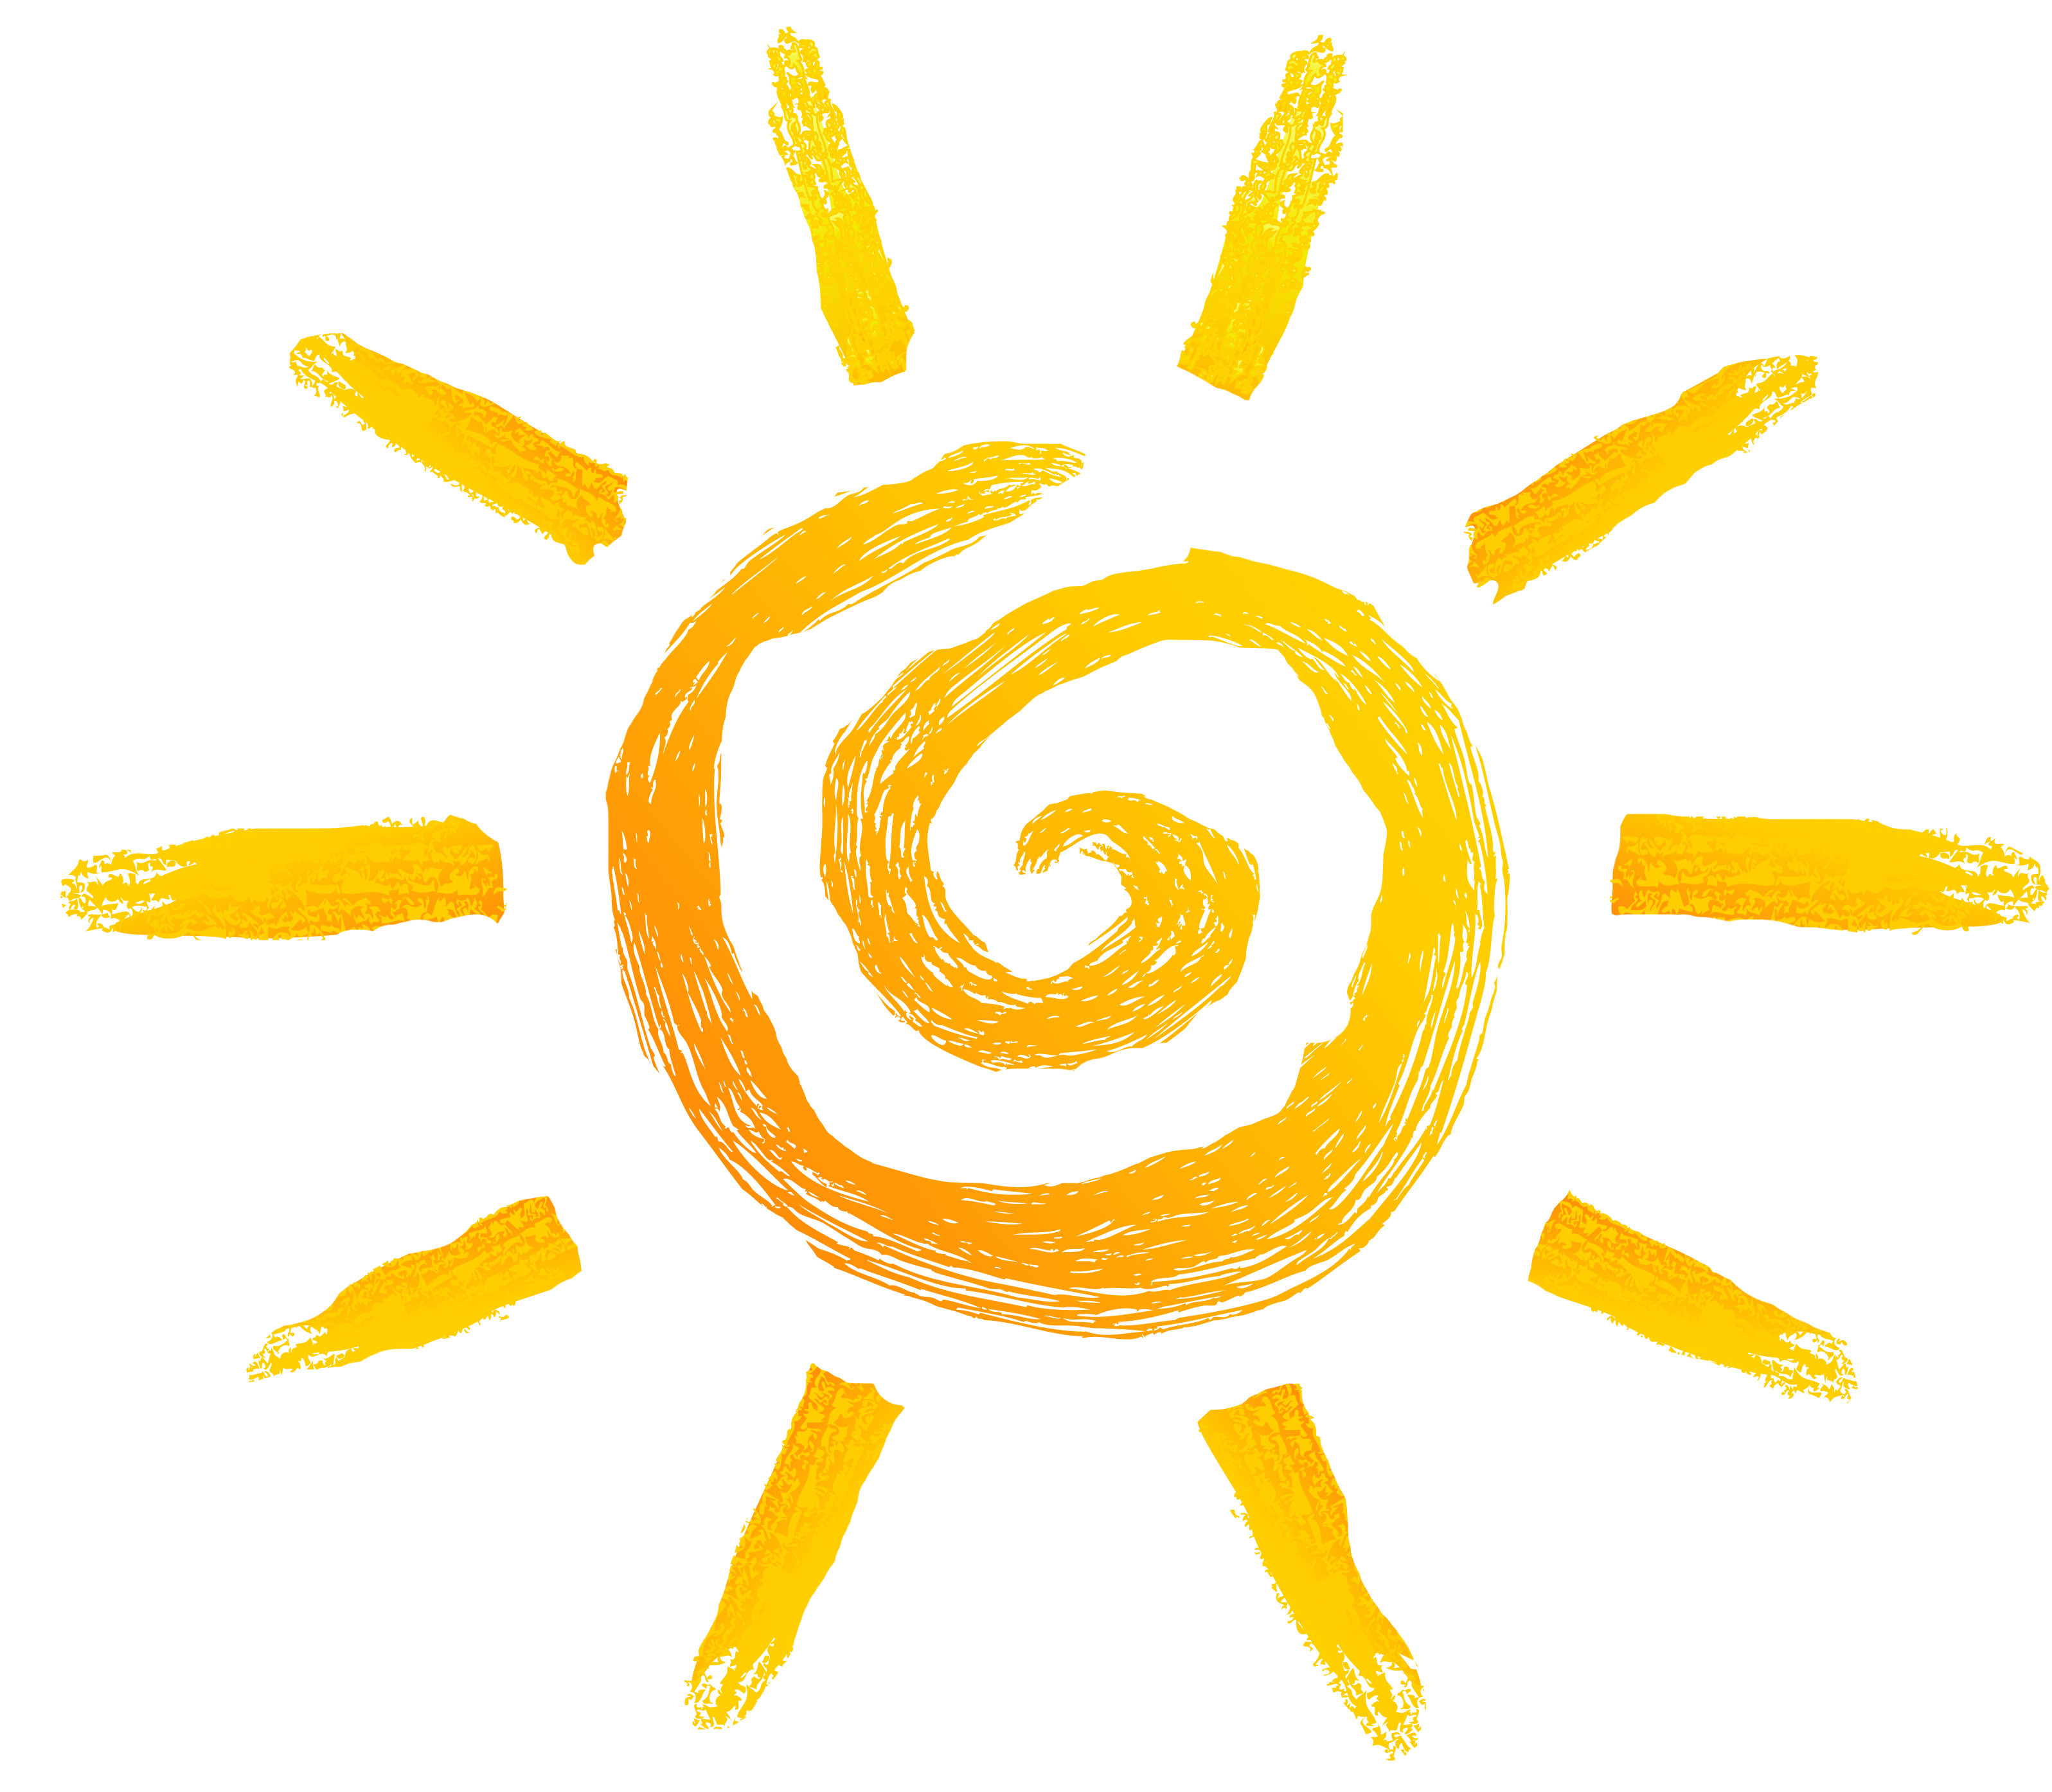 Солнце изображение рисунок. Солнце рисунок. Солнце риконок. Солнышко рисунок. Символ солнца.